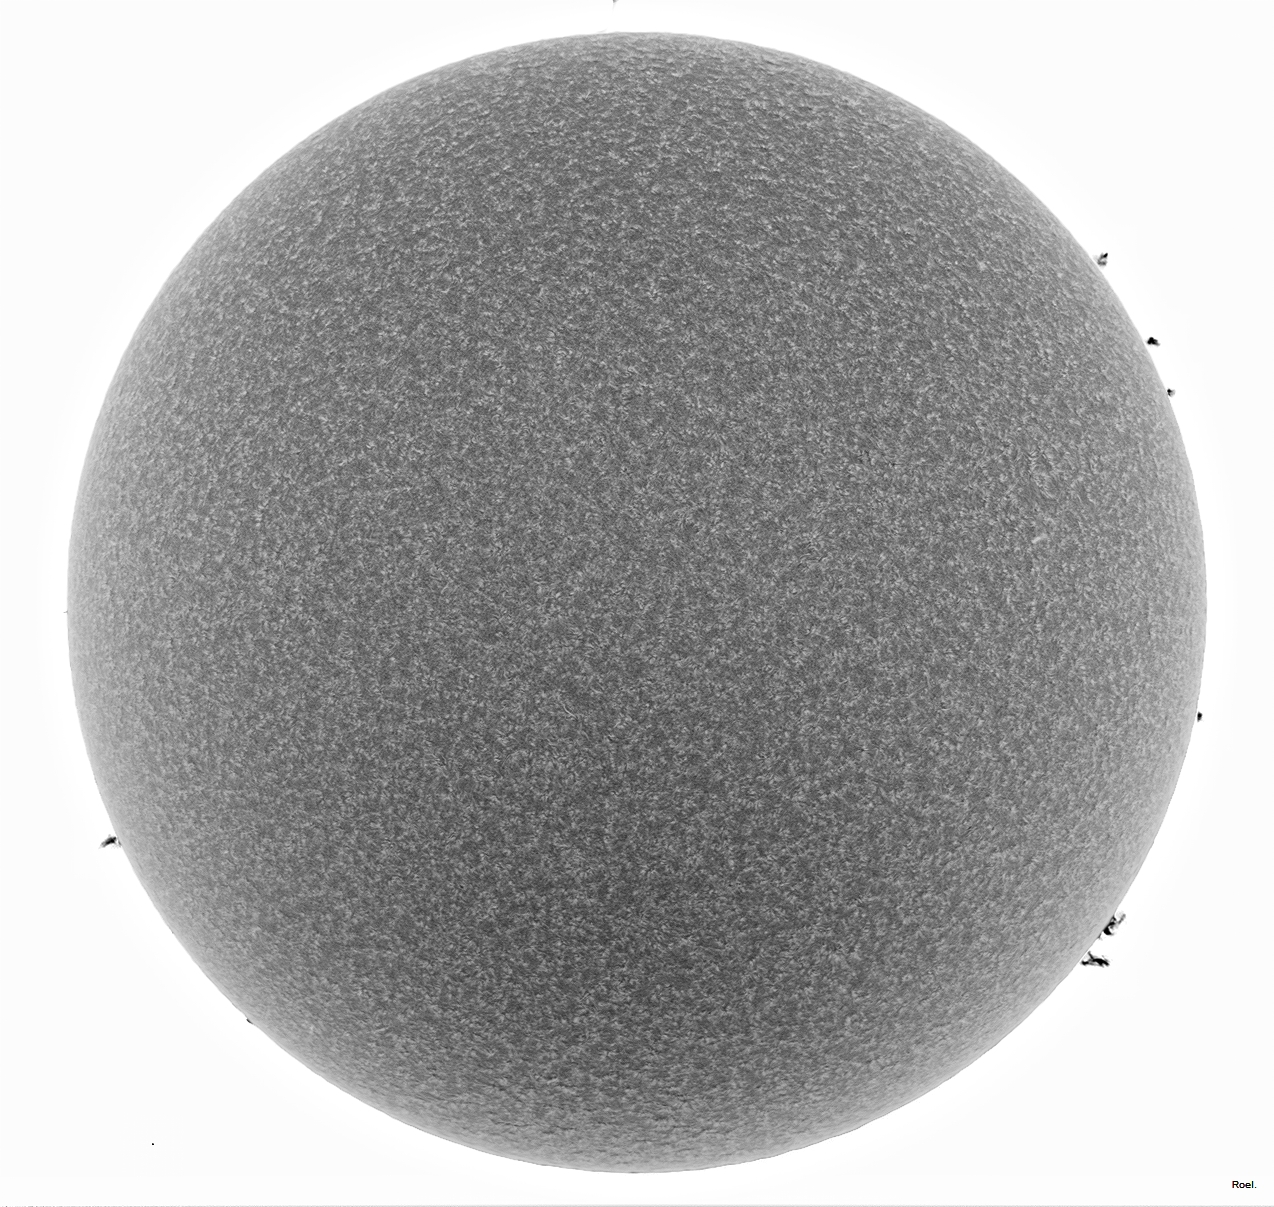 Sol del 13 de enero del 2019-Solarmax 90-DS-BF30-1neg.jpg